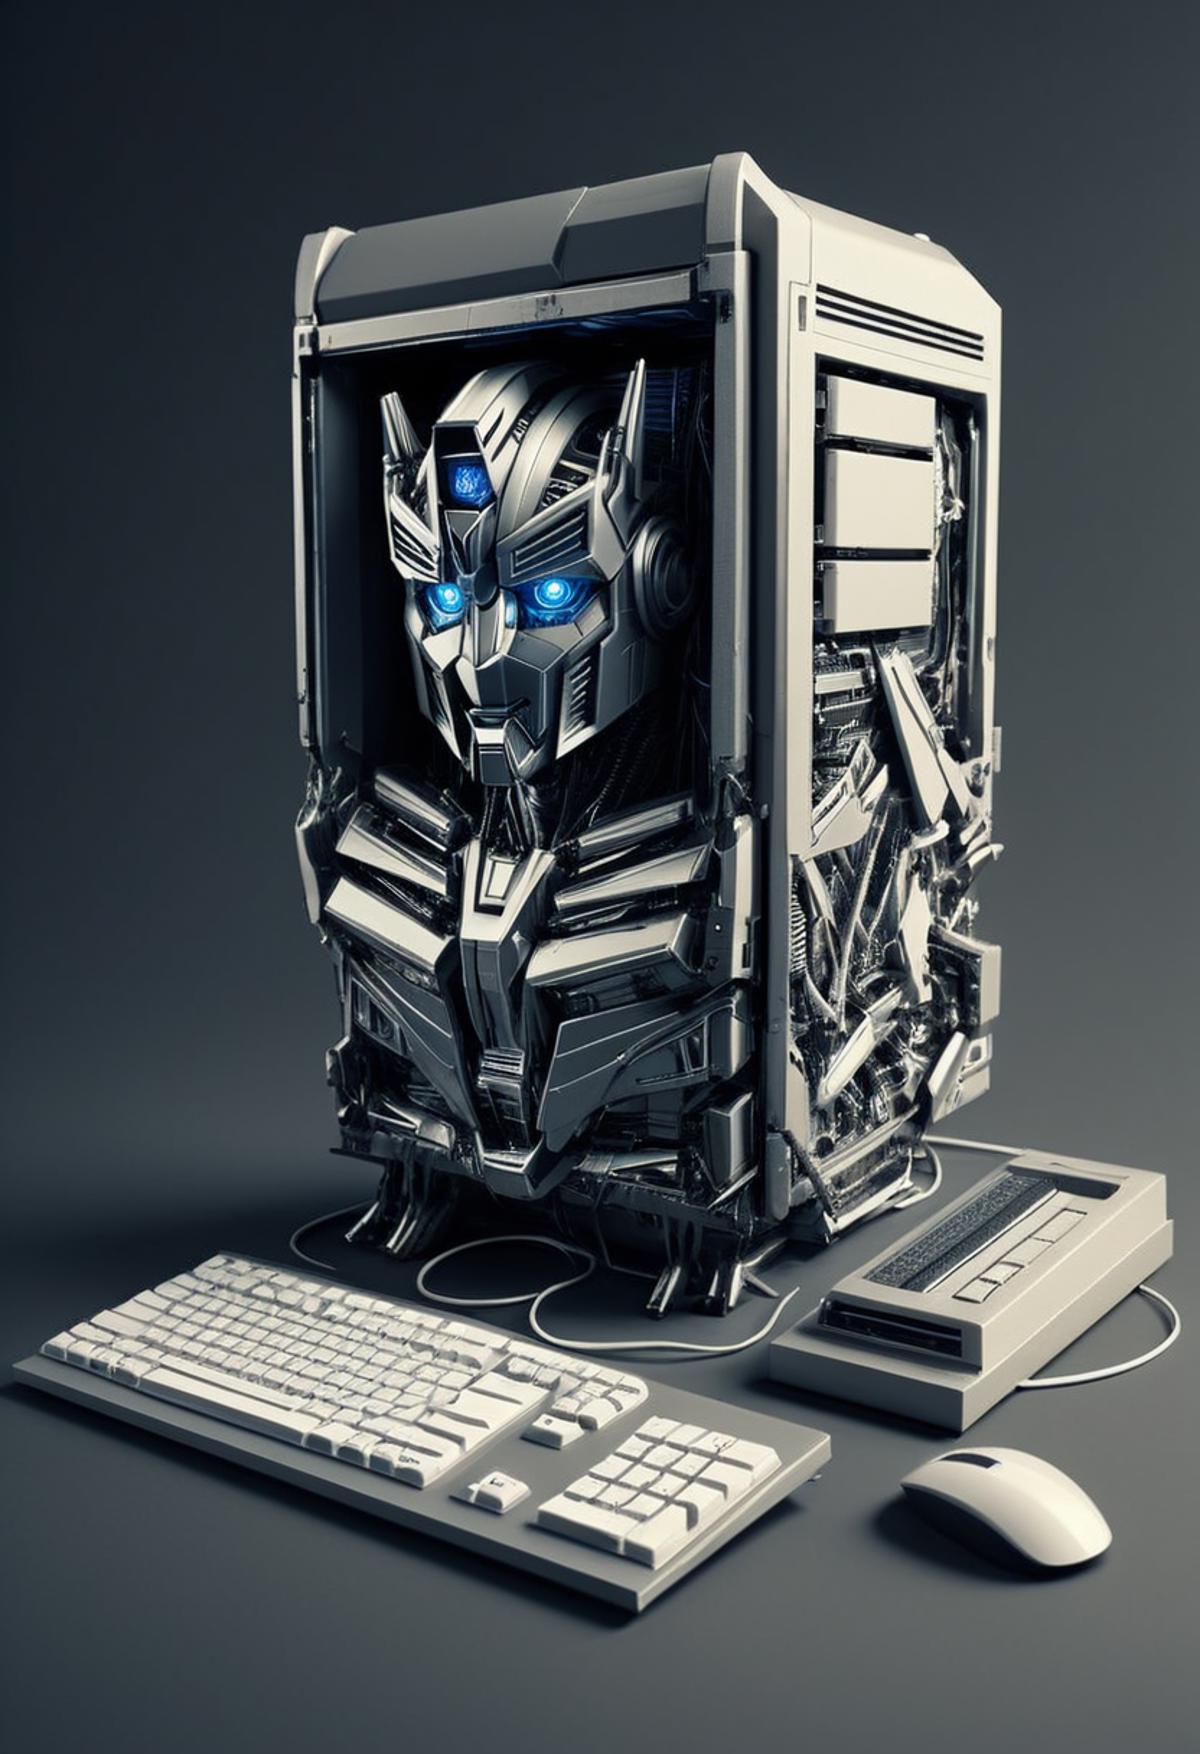 TransformersStyleXL image by Dever